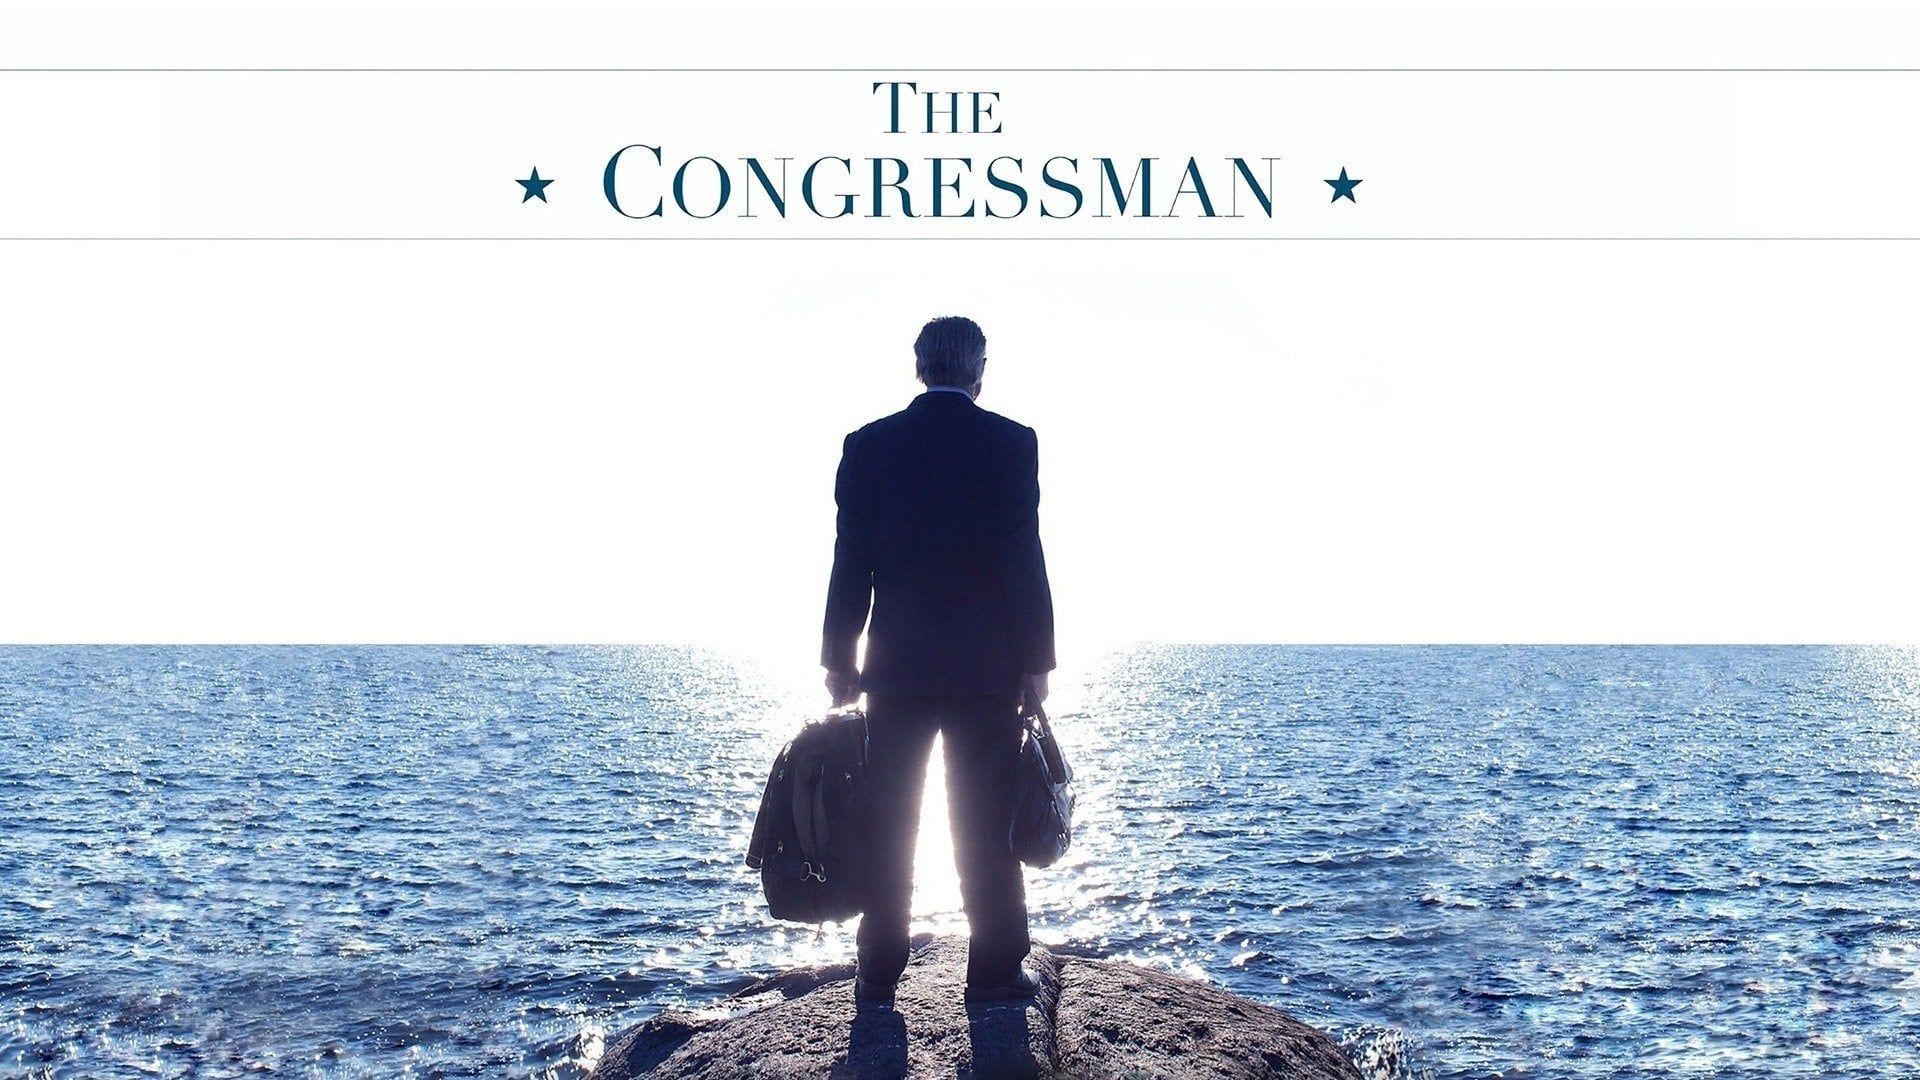 The Congressman background